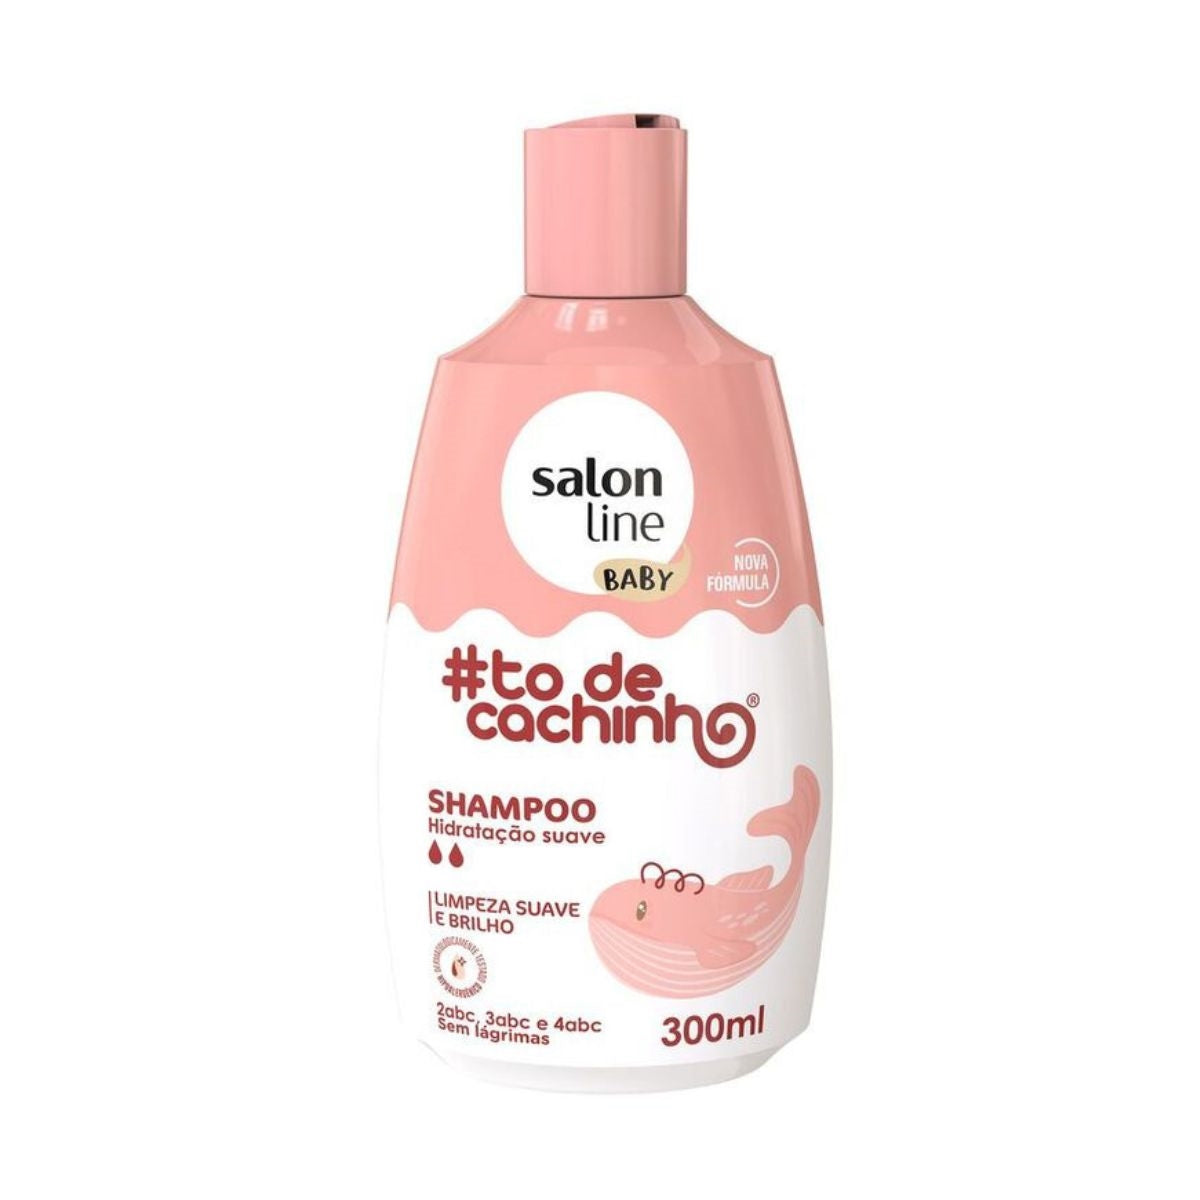 Salon Line #todecachinhos Baby 2,3,4 ABC - Shampoo 300ml